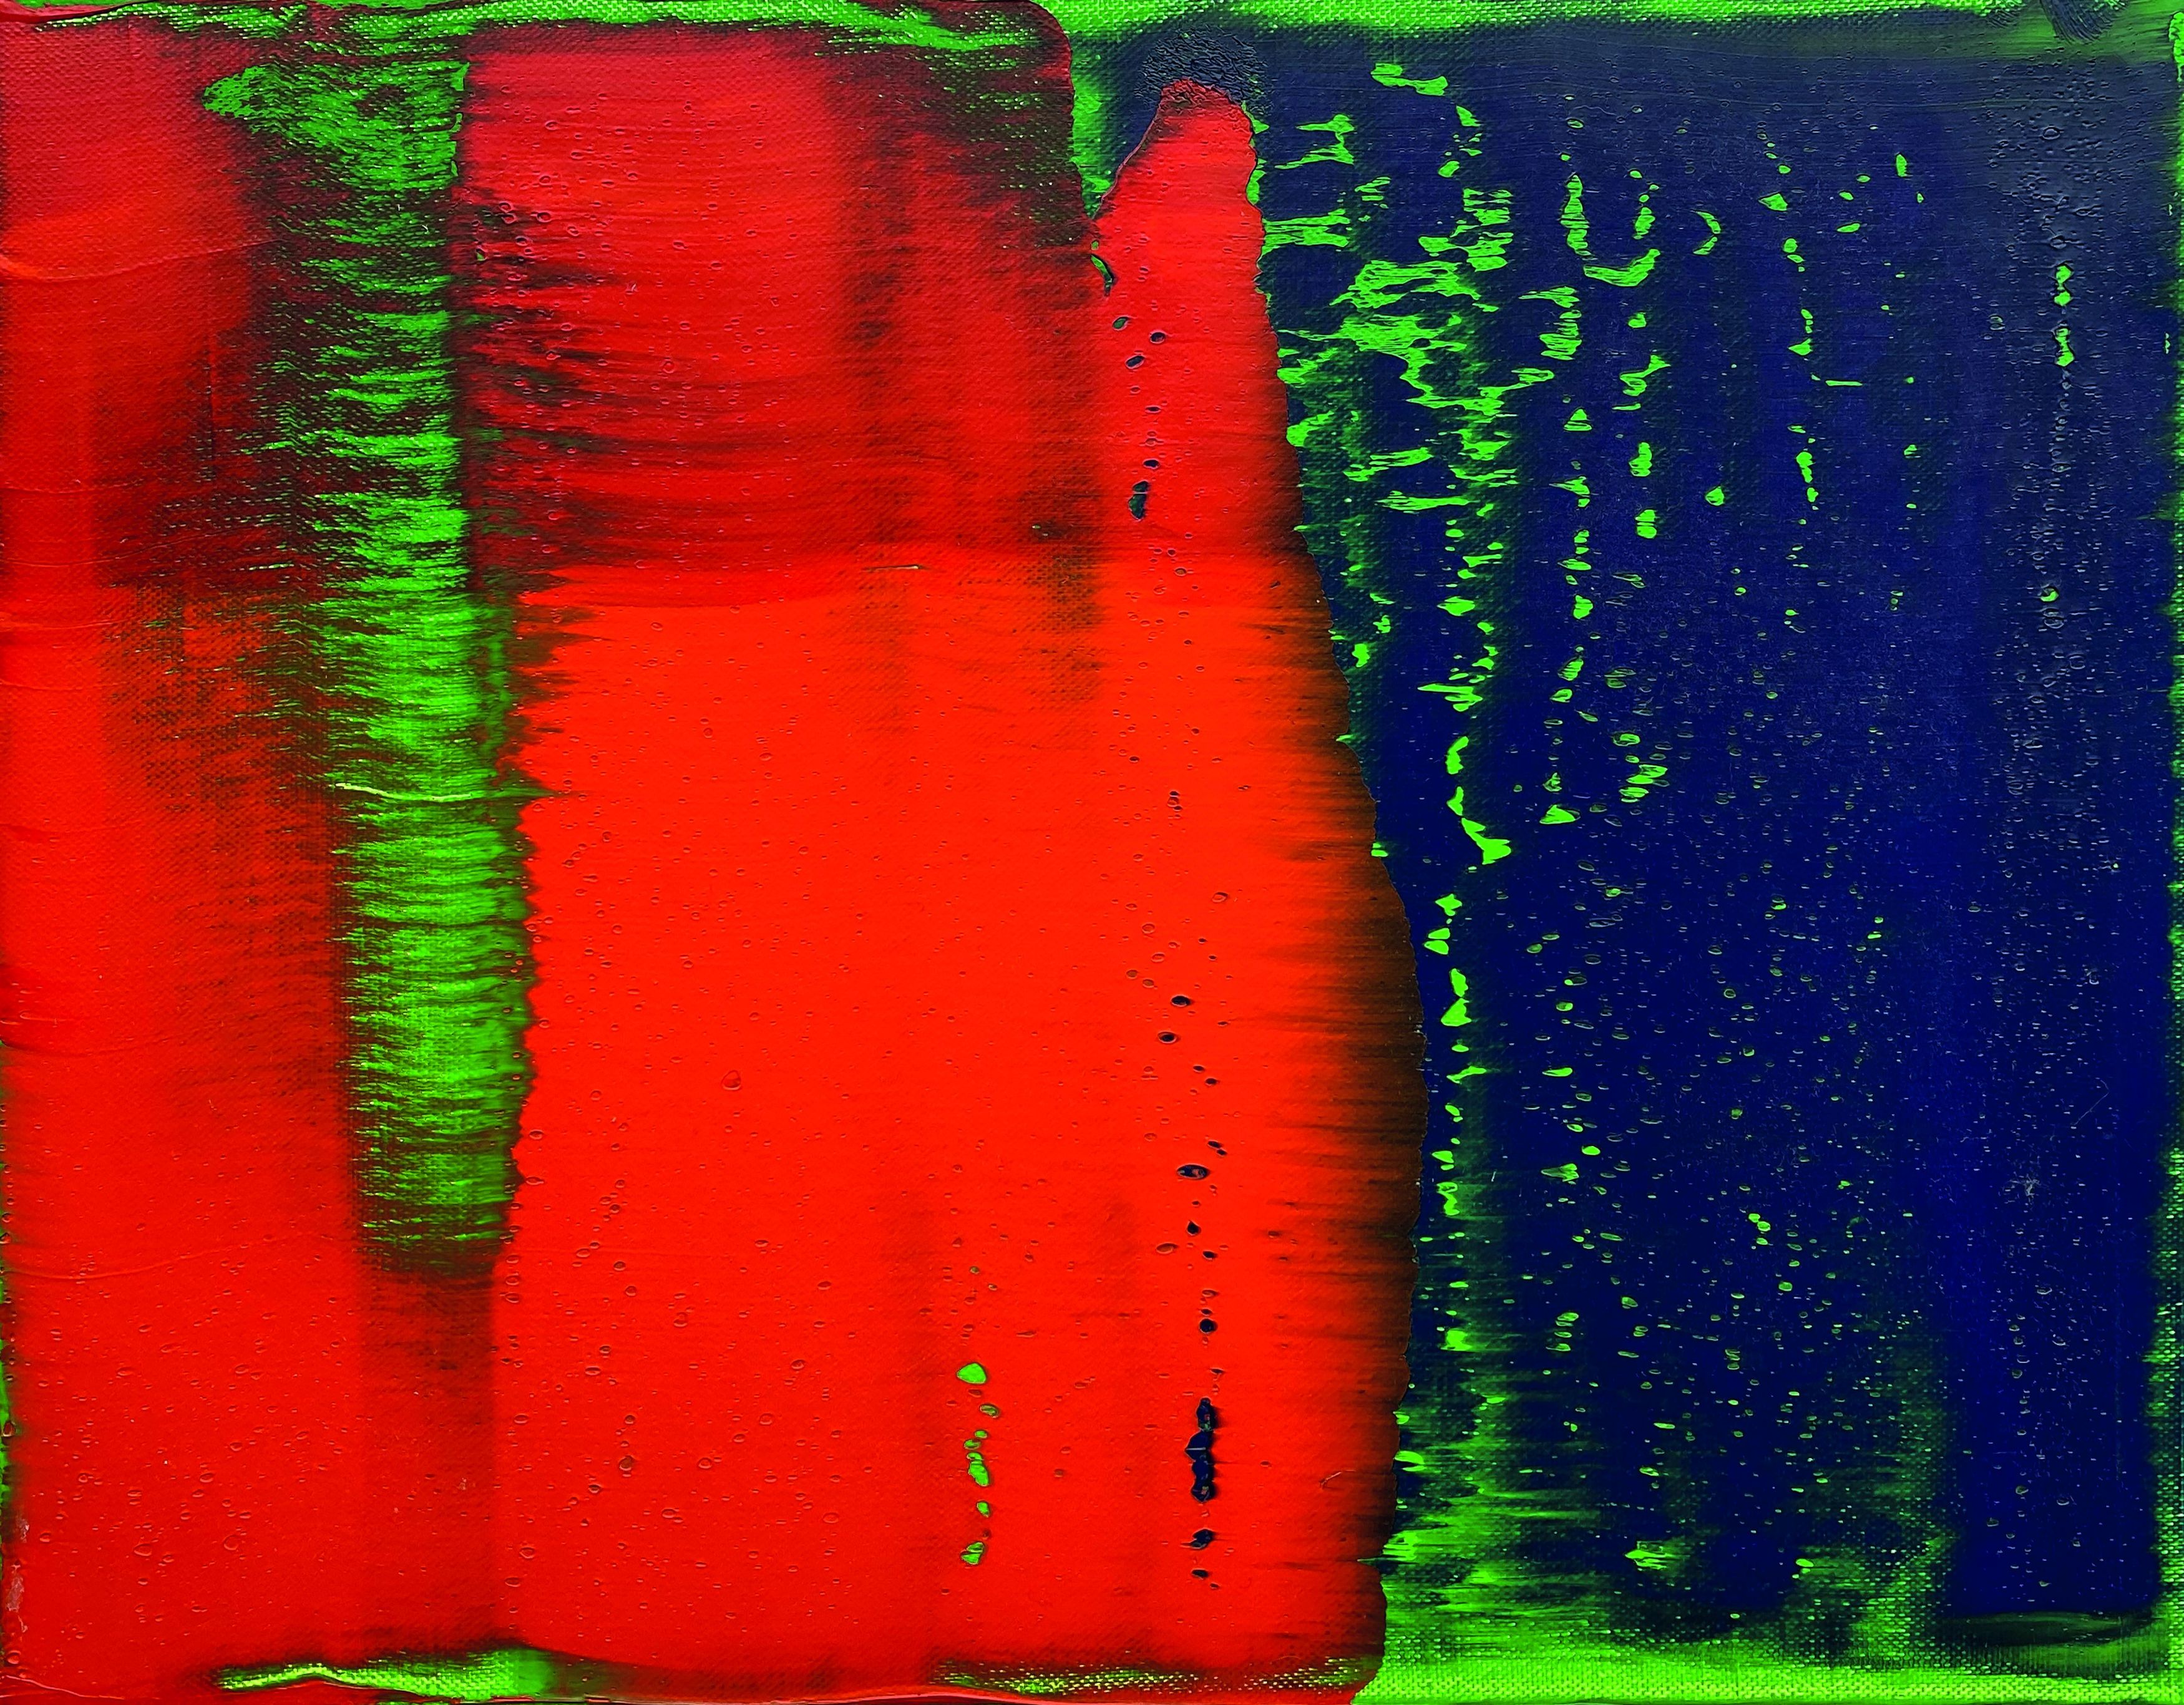 Gerhard Richter - Green-Blue-Red fuer Parkett 35, 77046-89, Van Ham Kunstauktionen